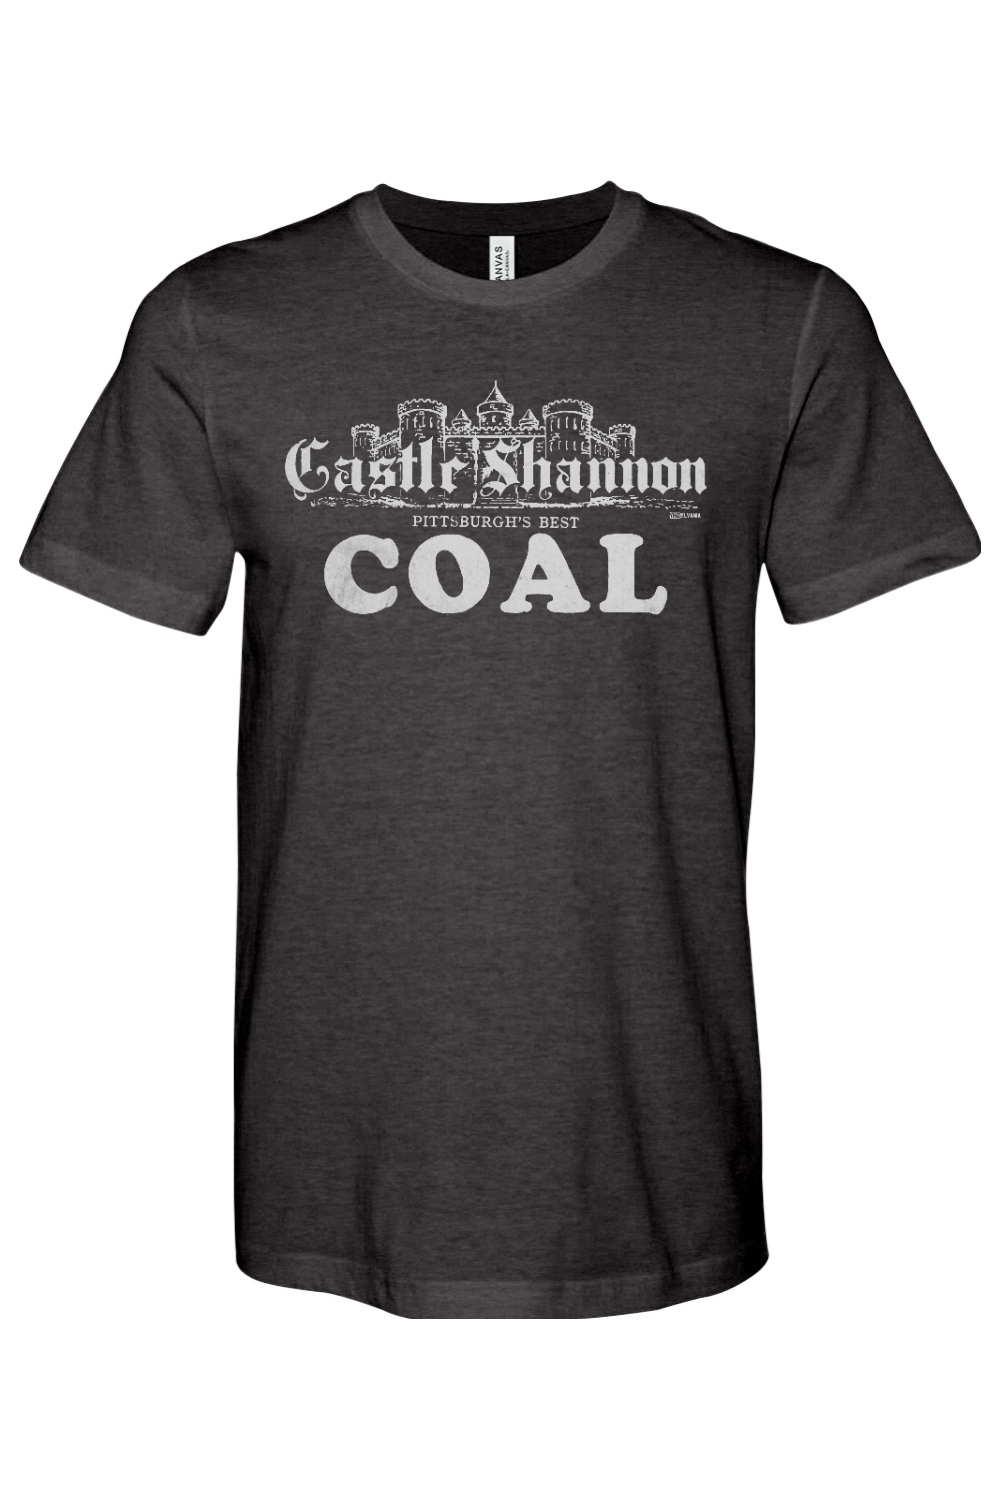 Castle Shannon Coal - Yinzylvania